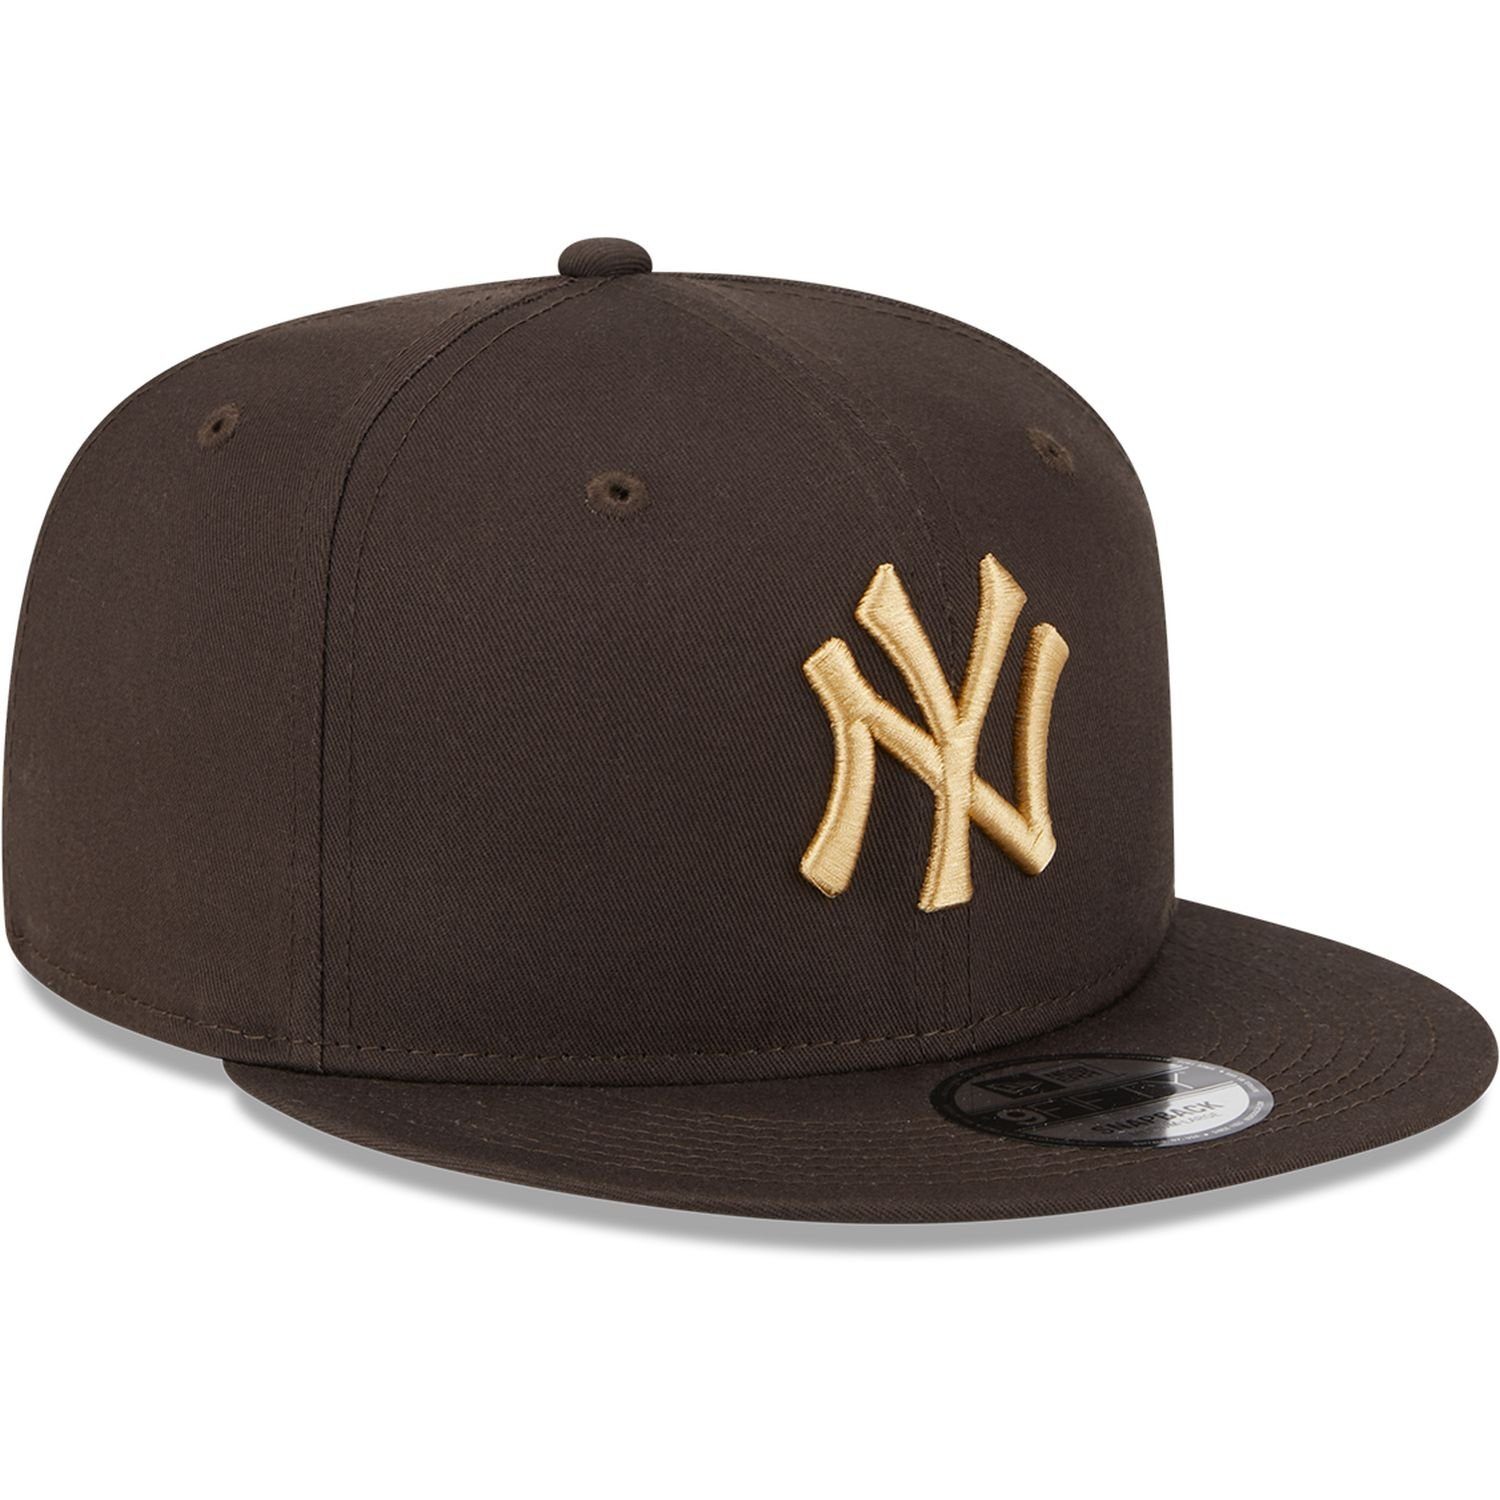 New New 9Fifty Era Cap Yankees Snapback York